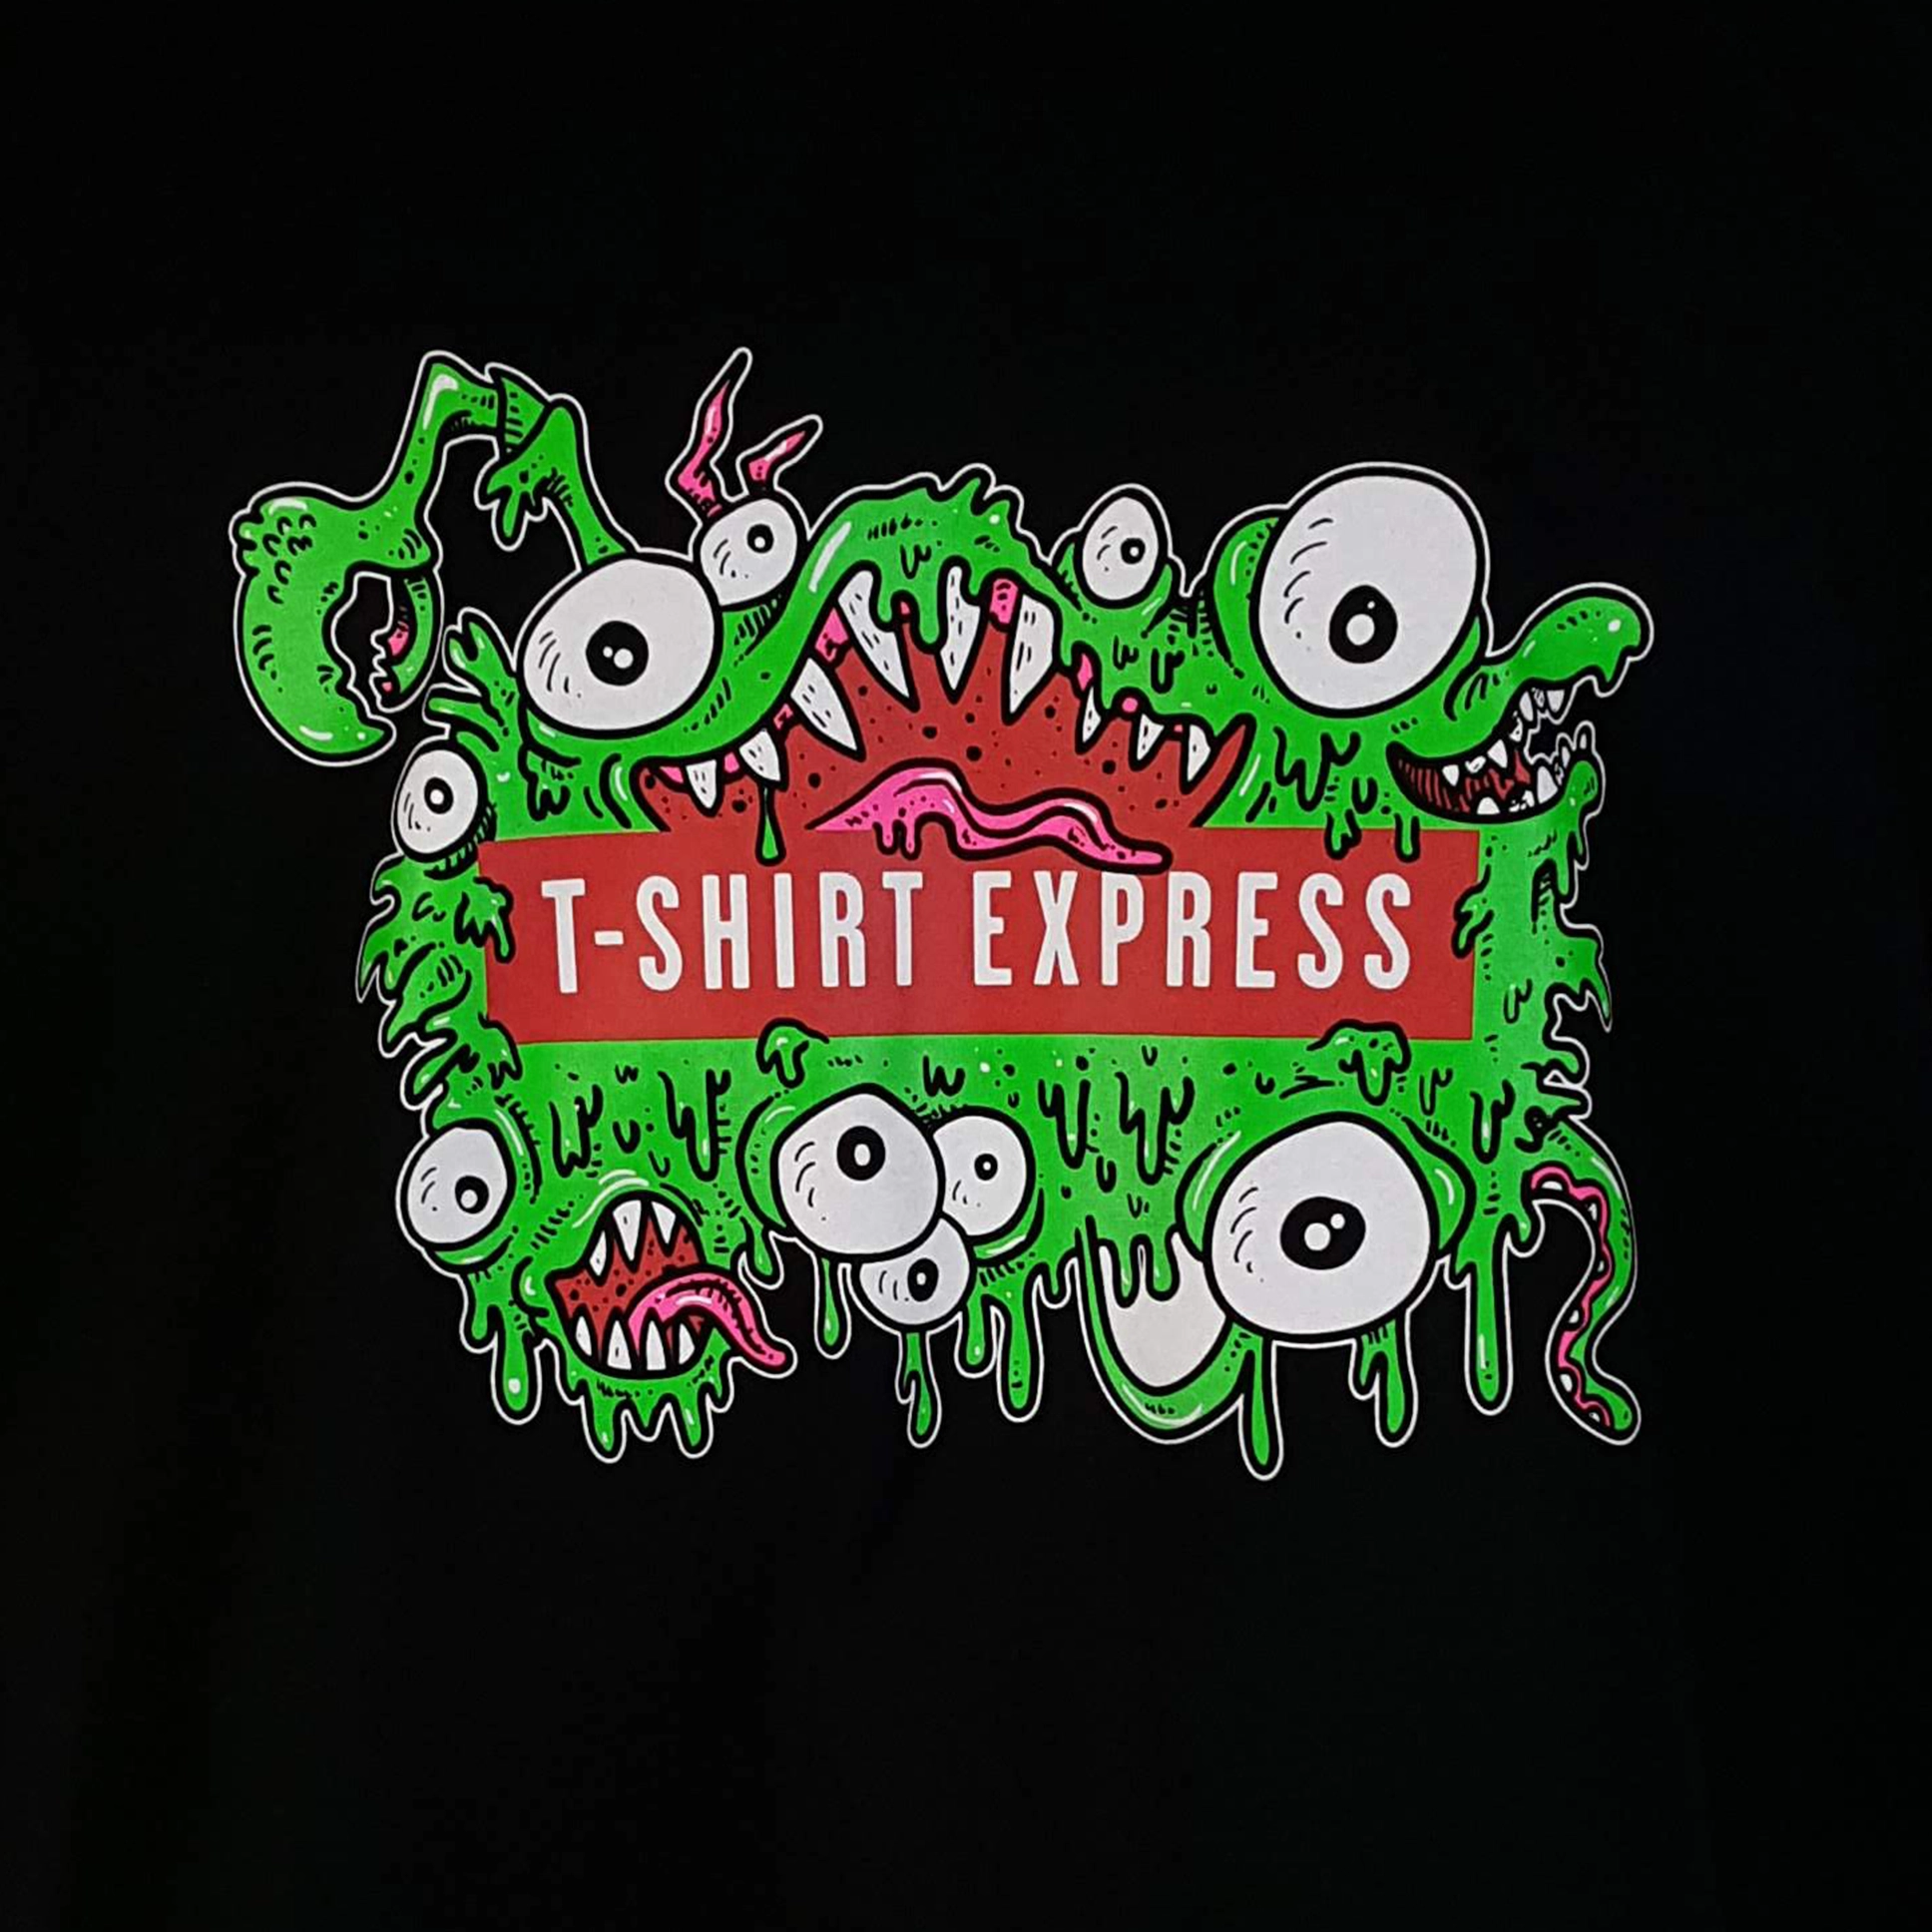 t-shirt express in Zanesville ohio